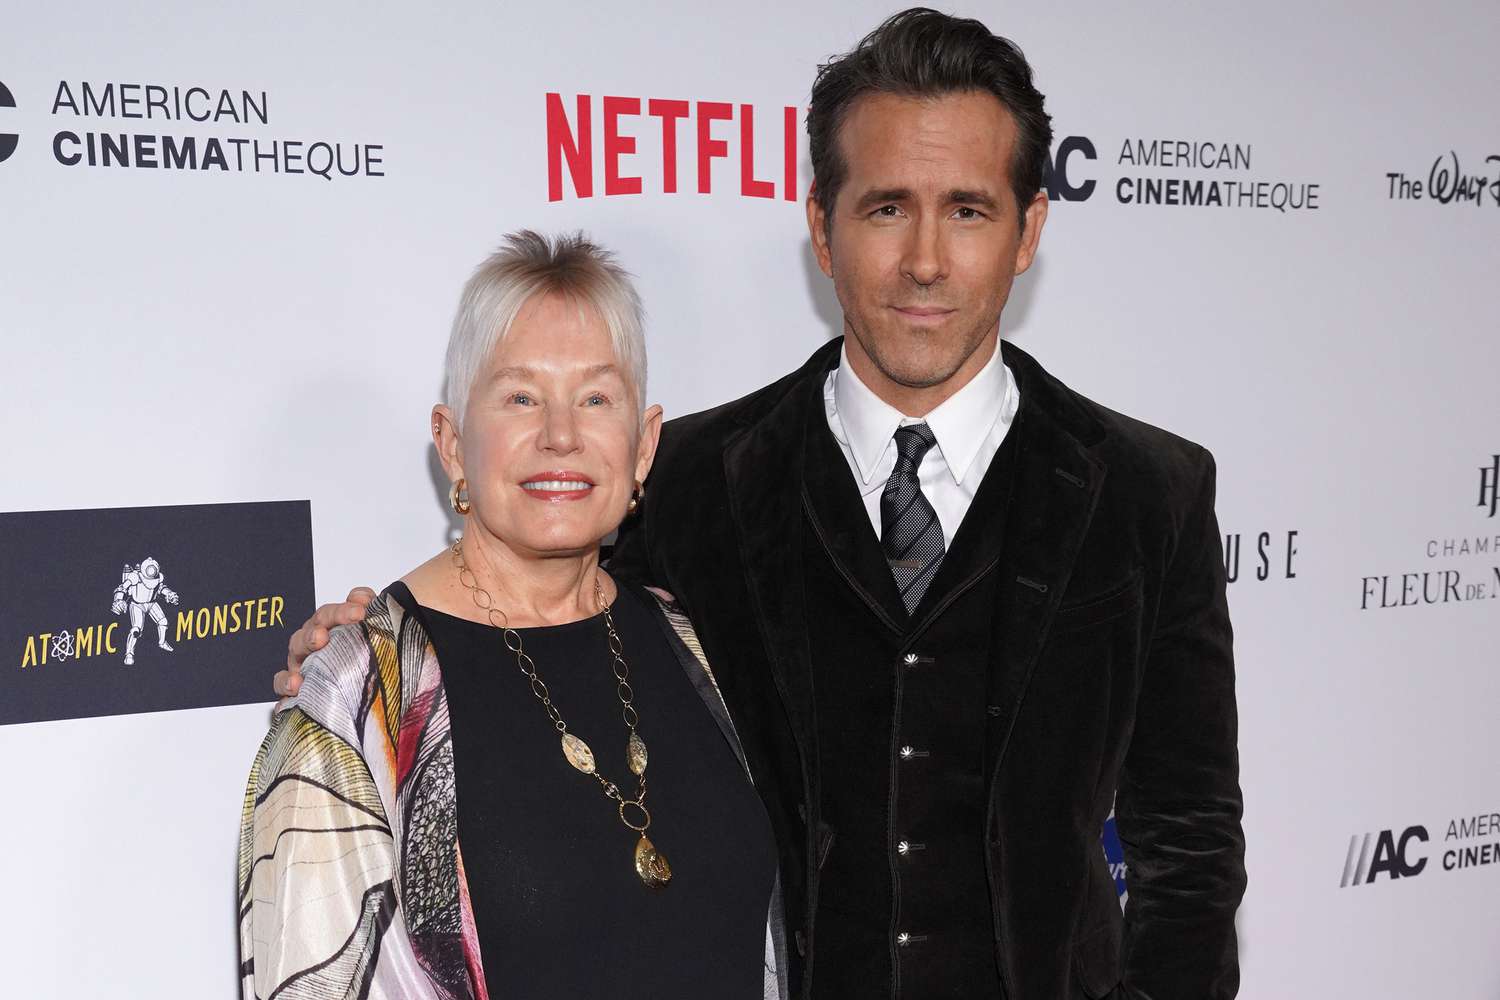 Ryan Reynolds' Mom Supports Him on Red Carpet Photo